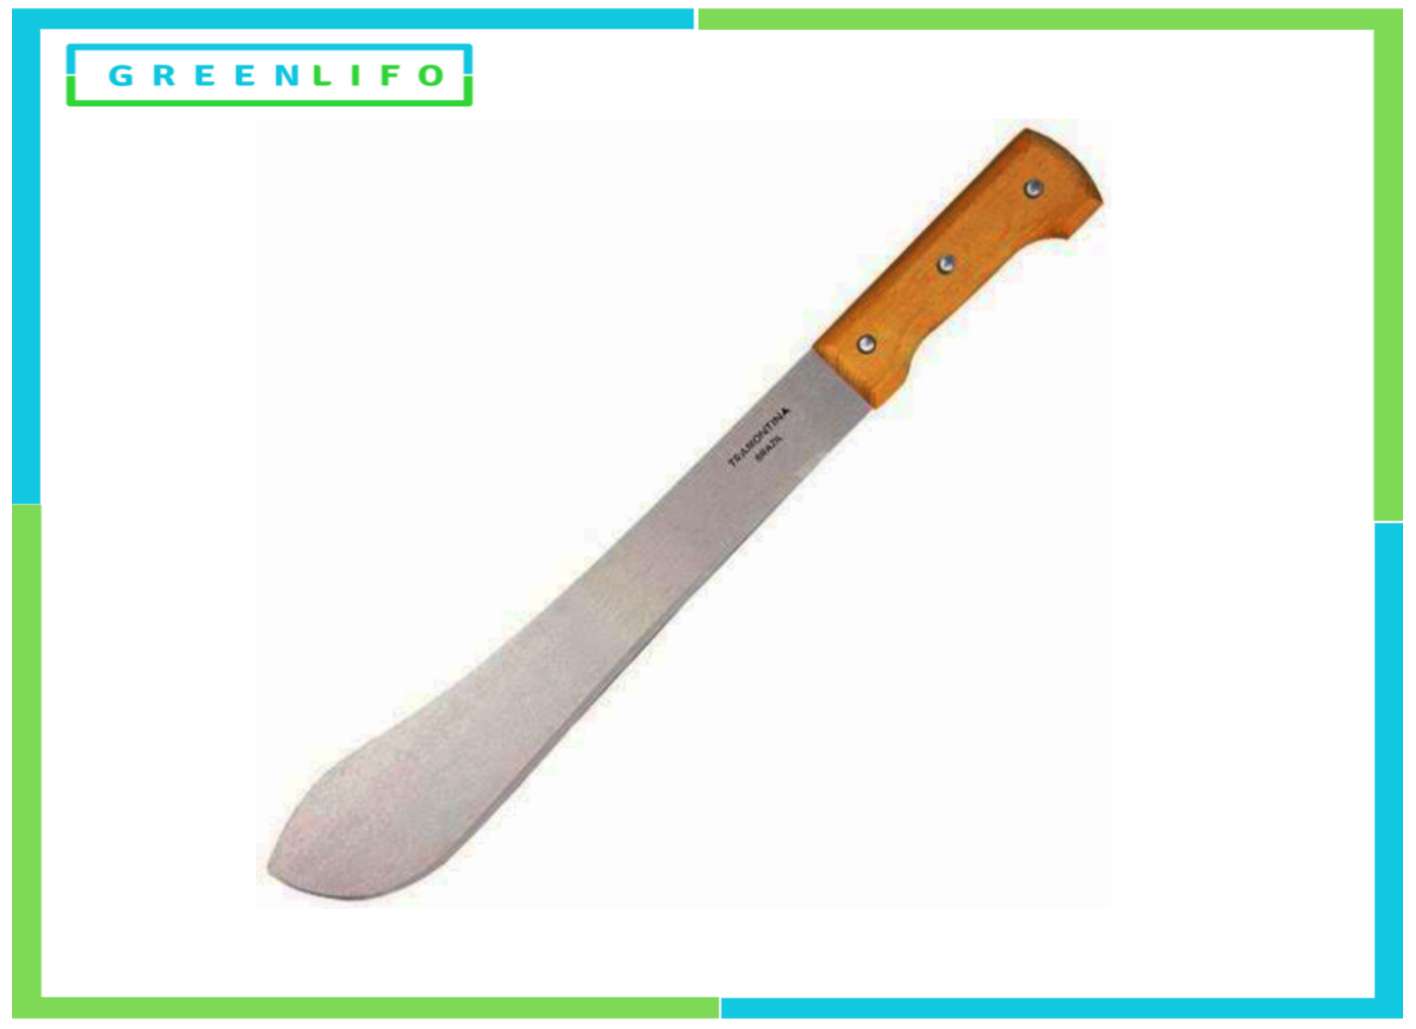 Bolo knife farm tools and equipment